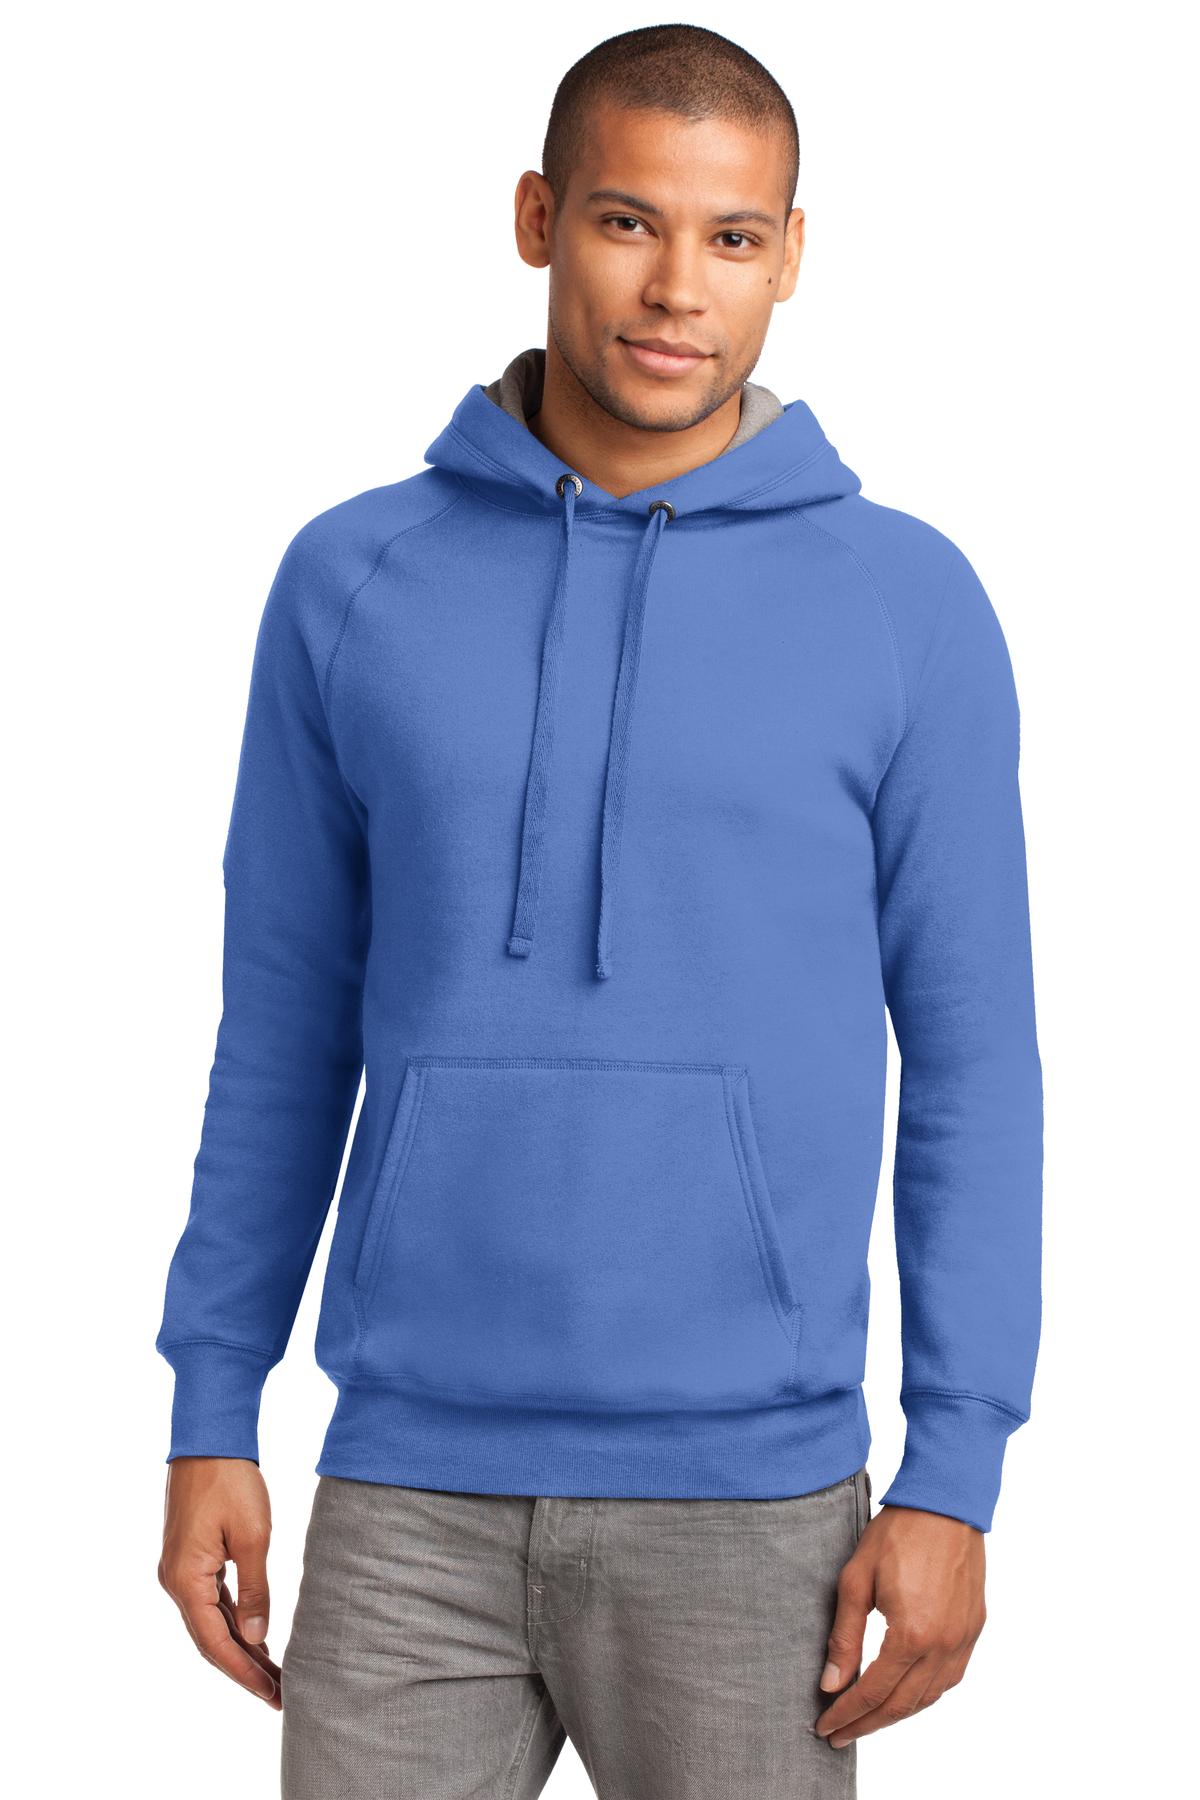 Hanes Nano Pullover Hooded Sweatshirt. HN270